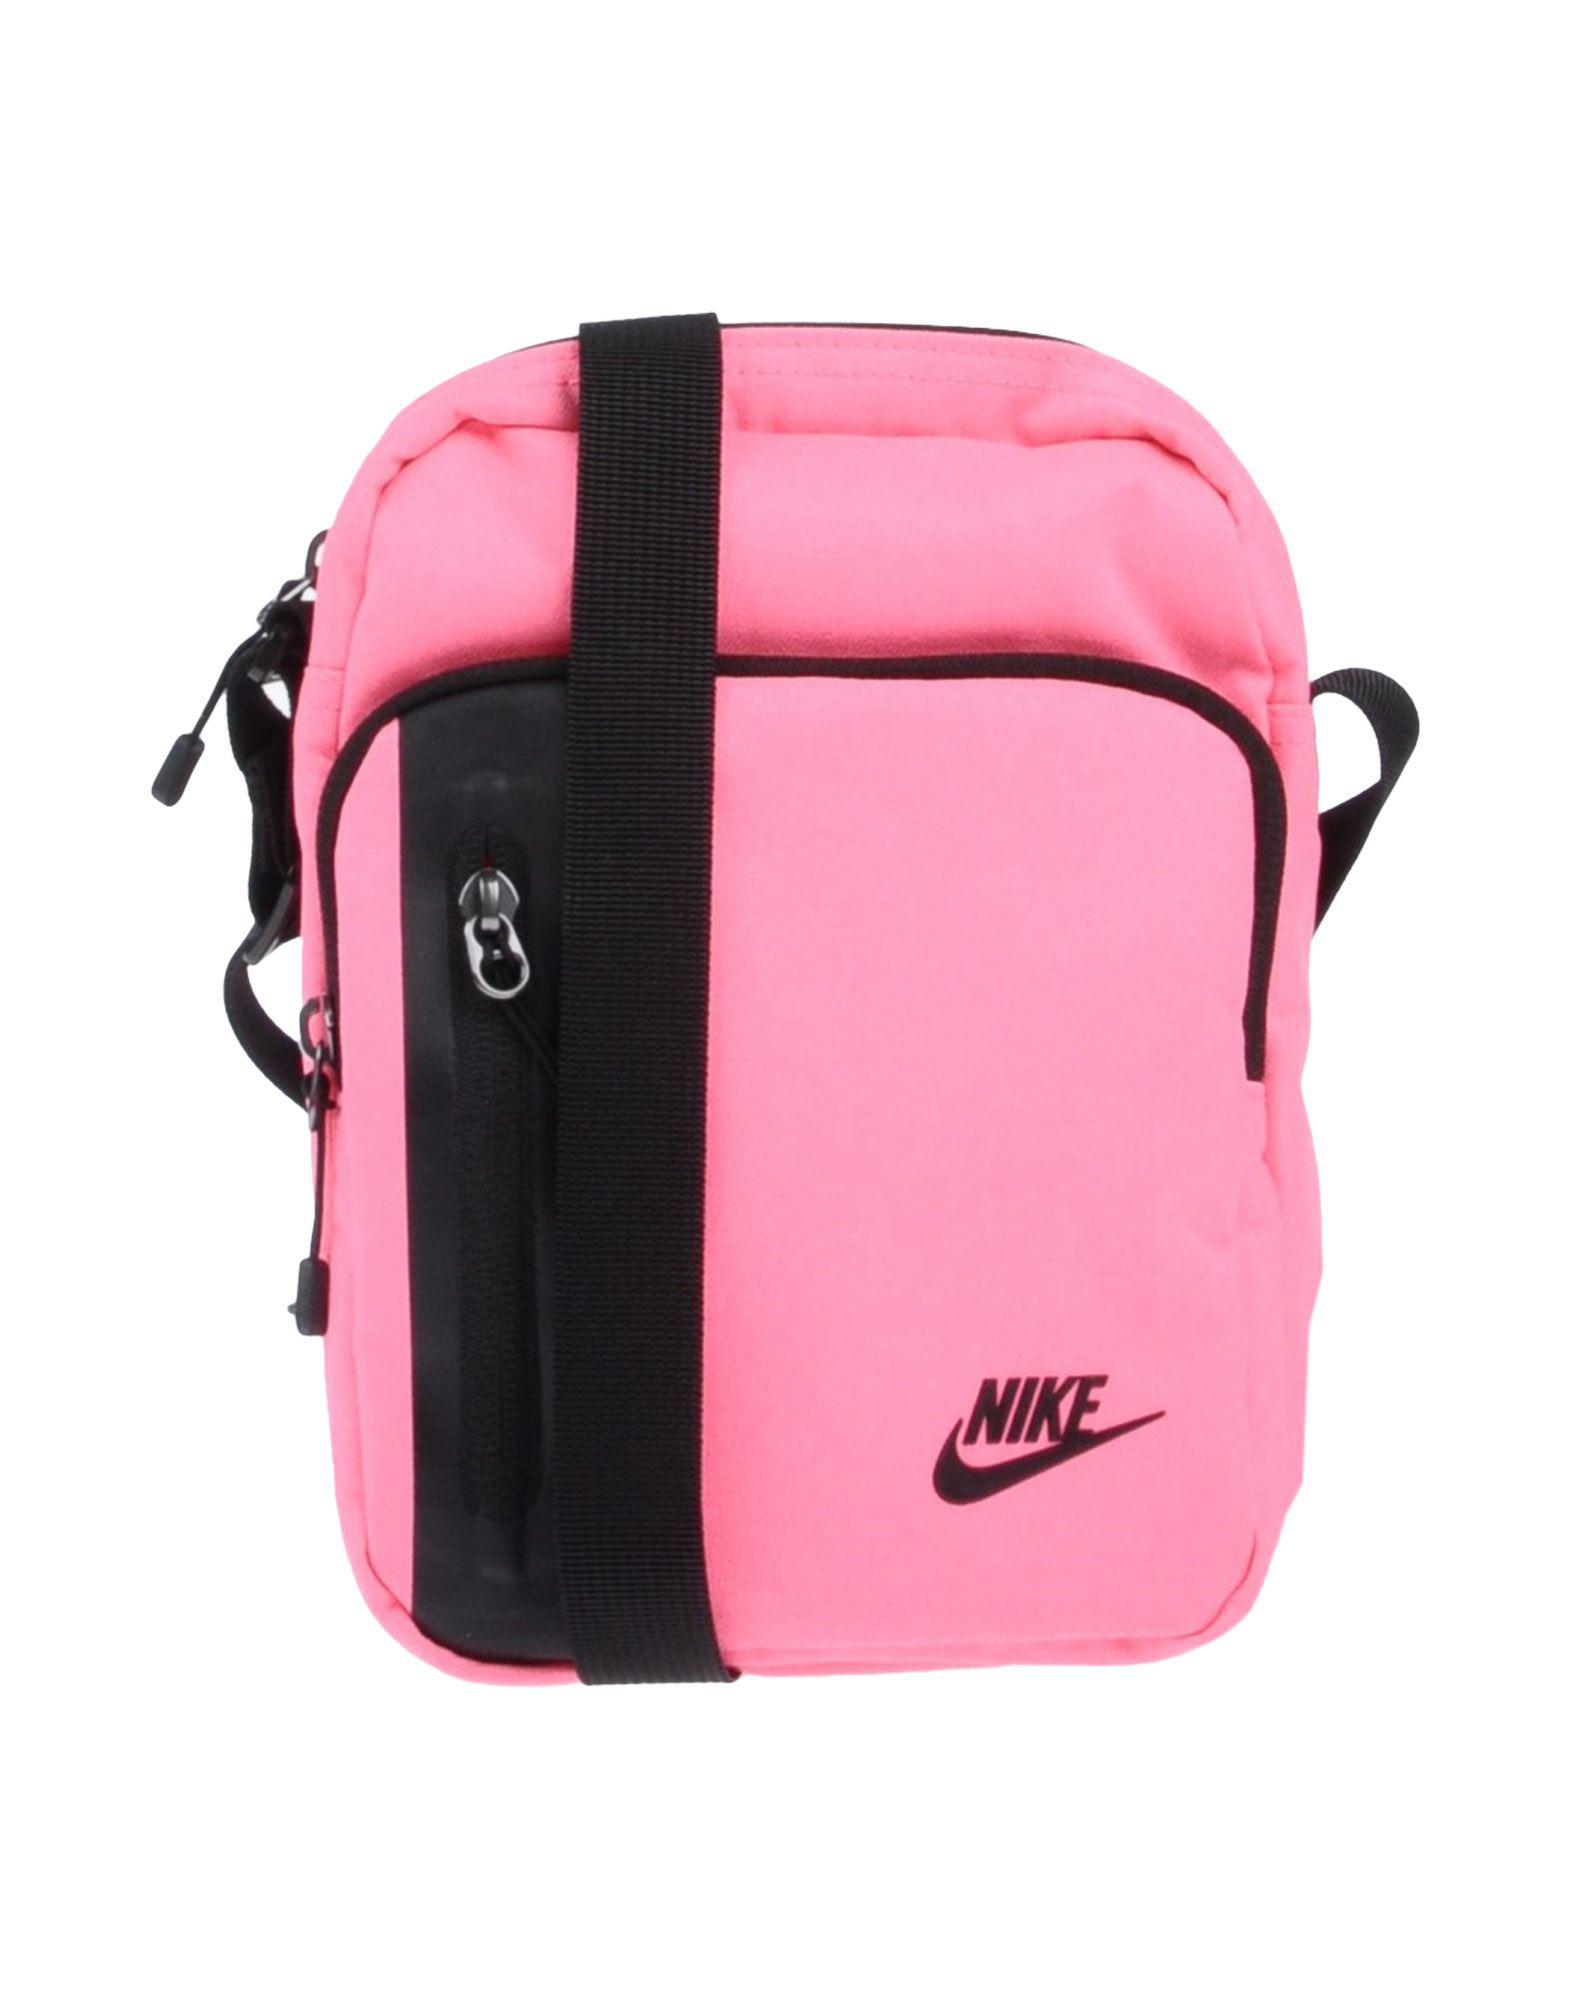 Nike Synthetic Cross-body Bag in Fuchsia (Pink) | Lyst